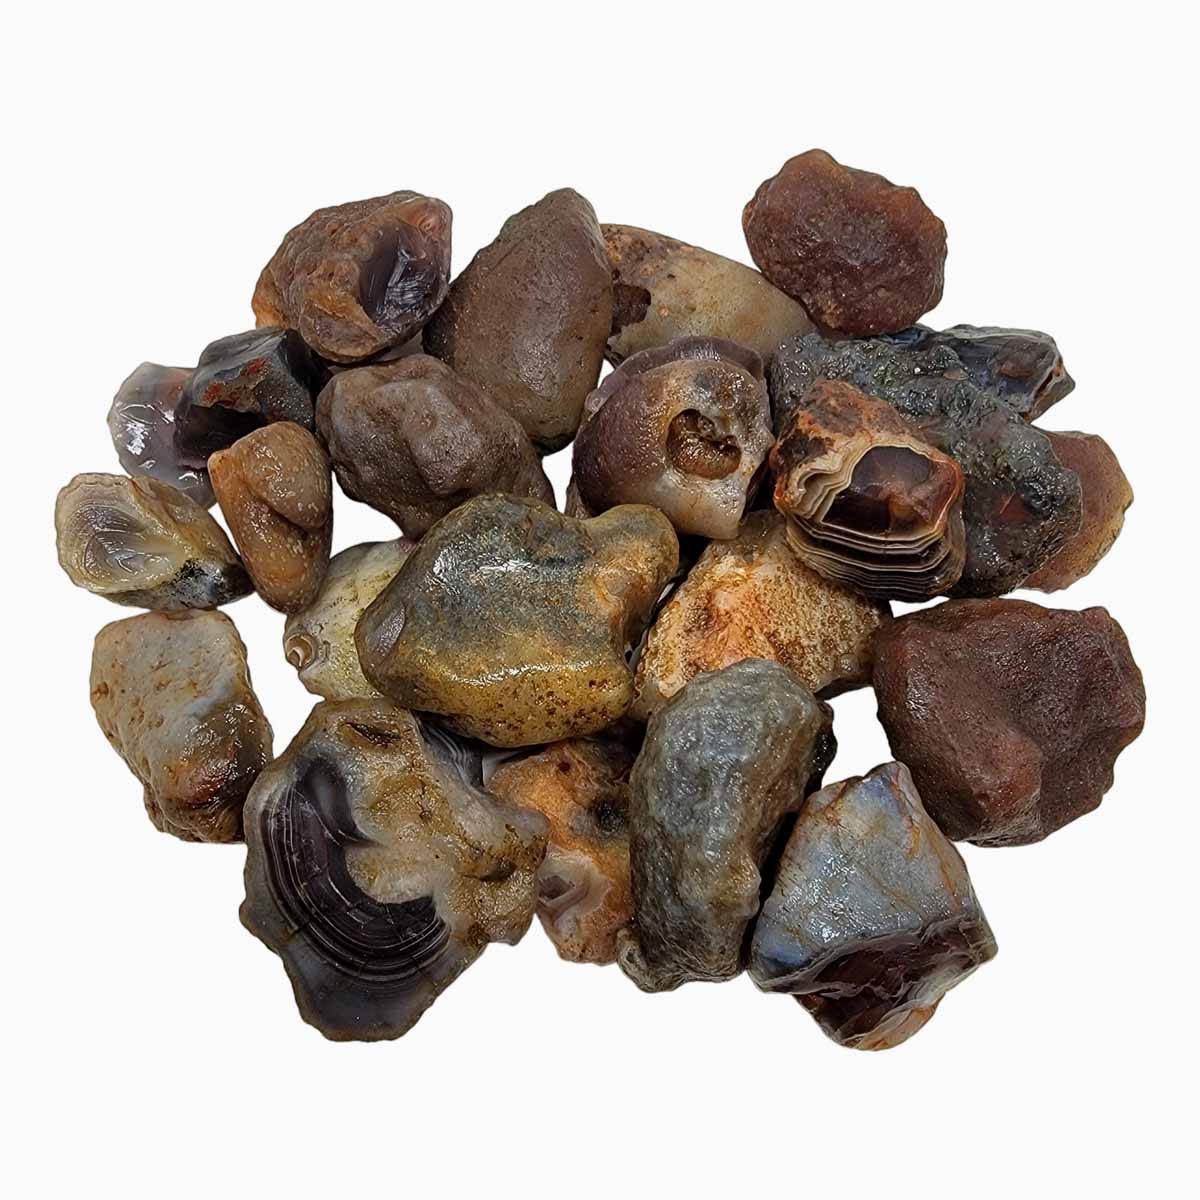 Natural Stones 1 Lbs Tumbling Rough Raw Materials for Cabbing Tumbling Trimming Crystals Reiki Healing Lapidary